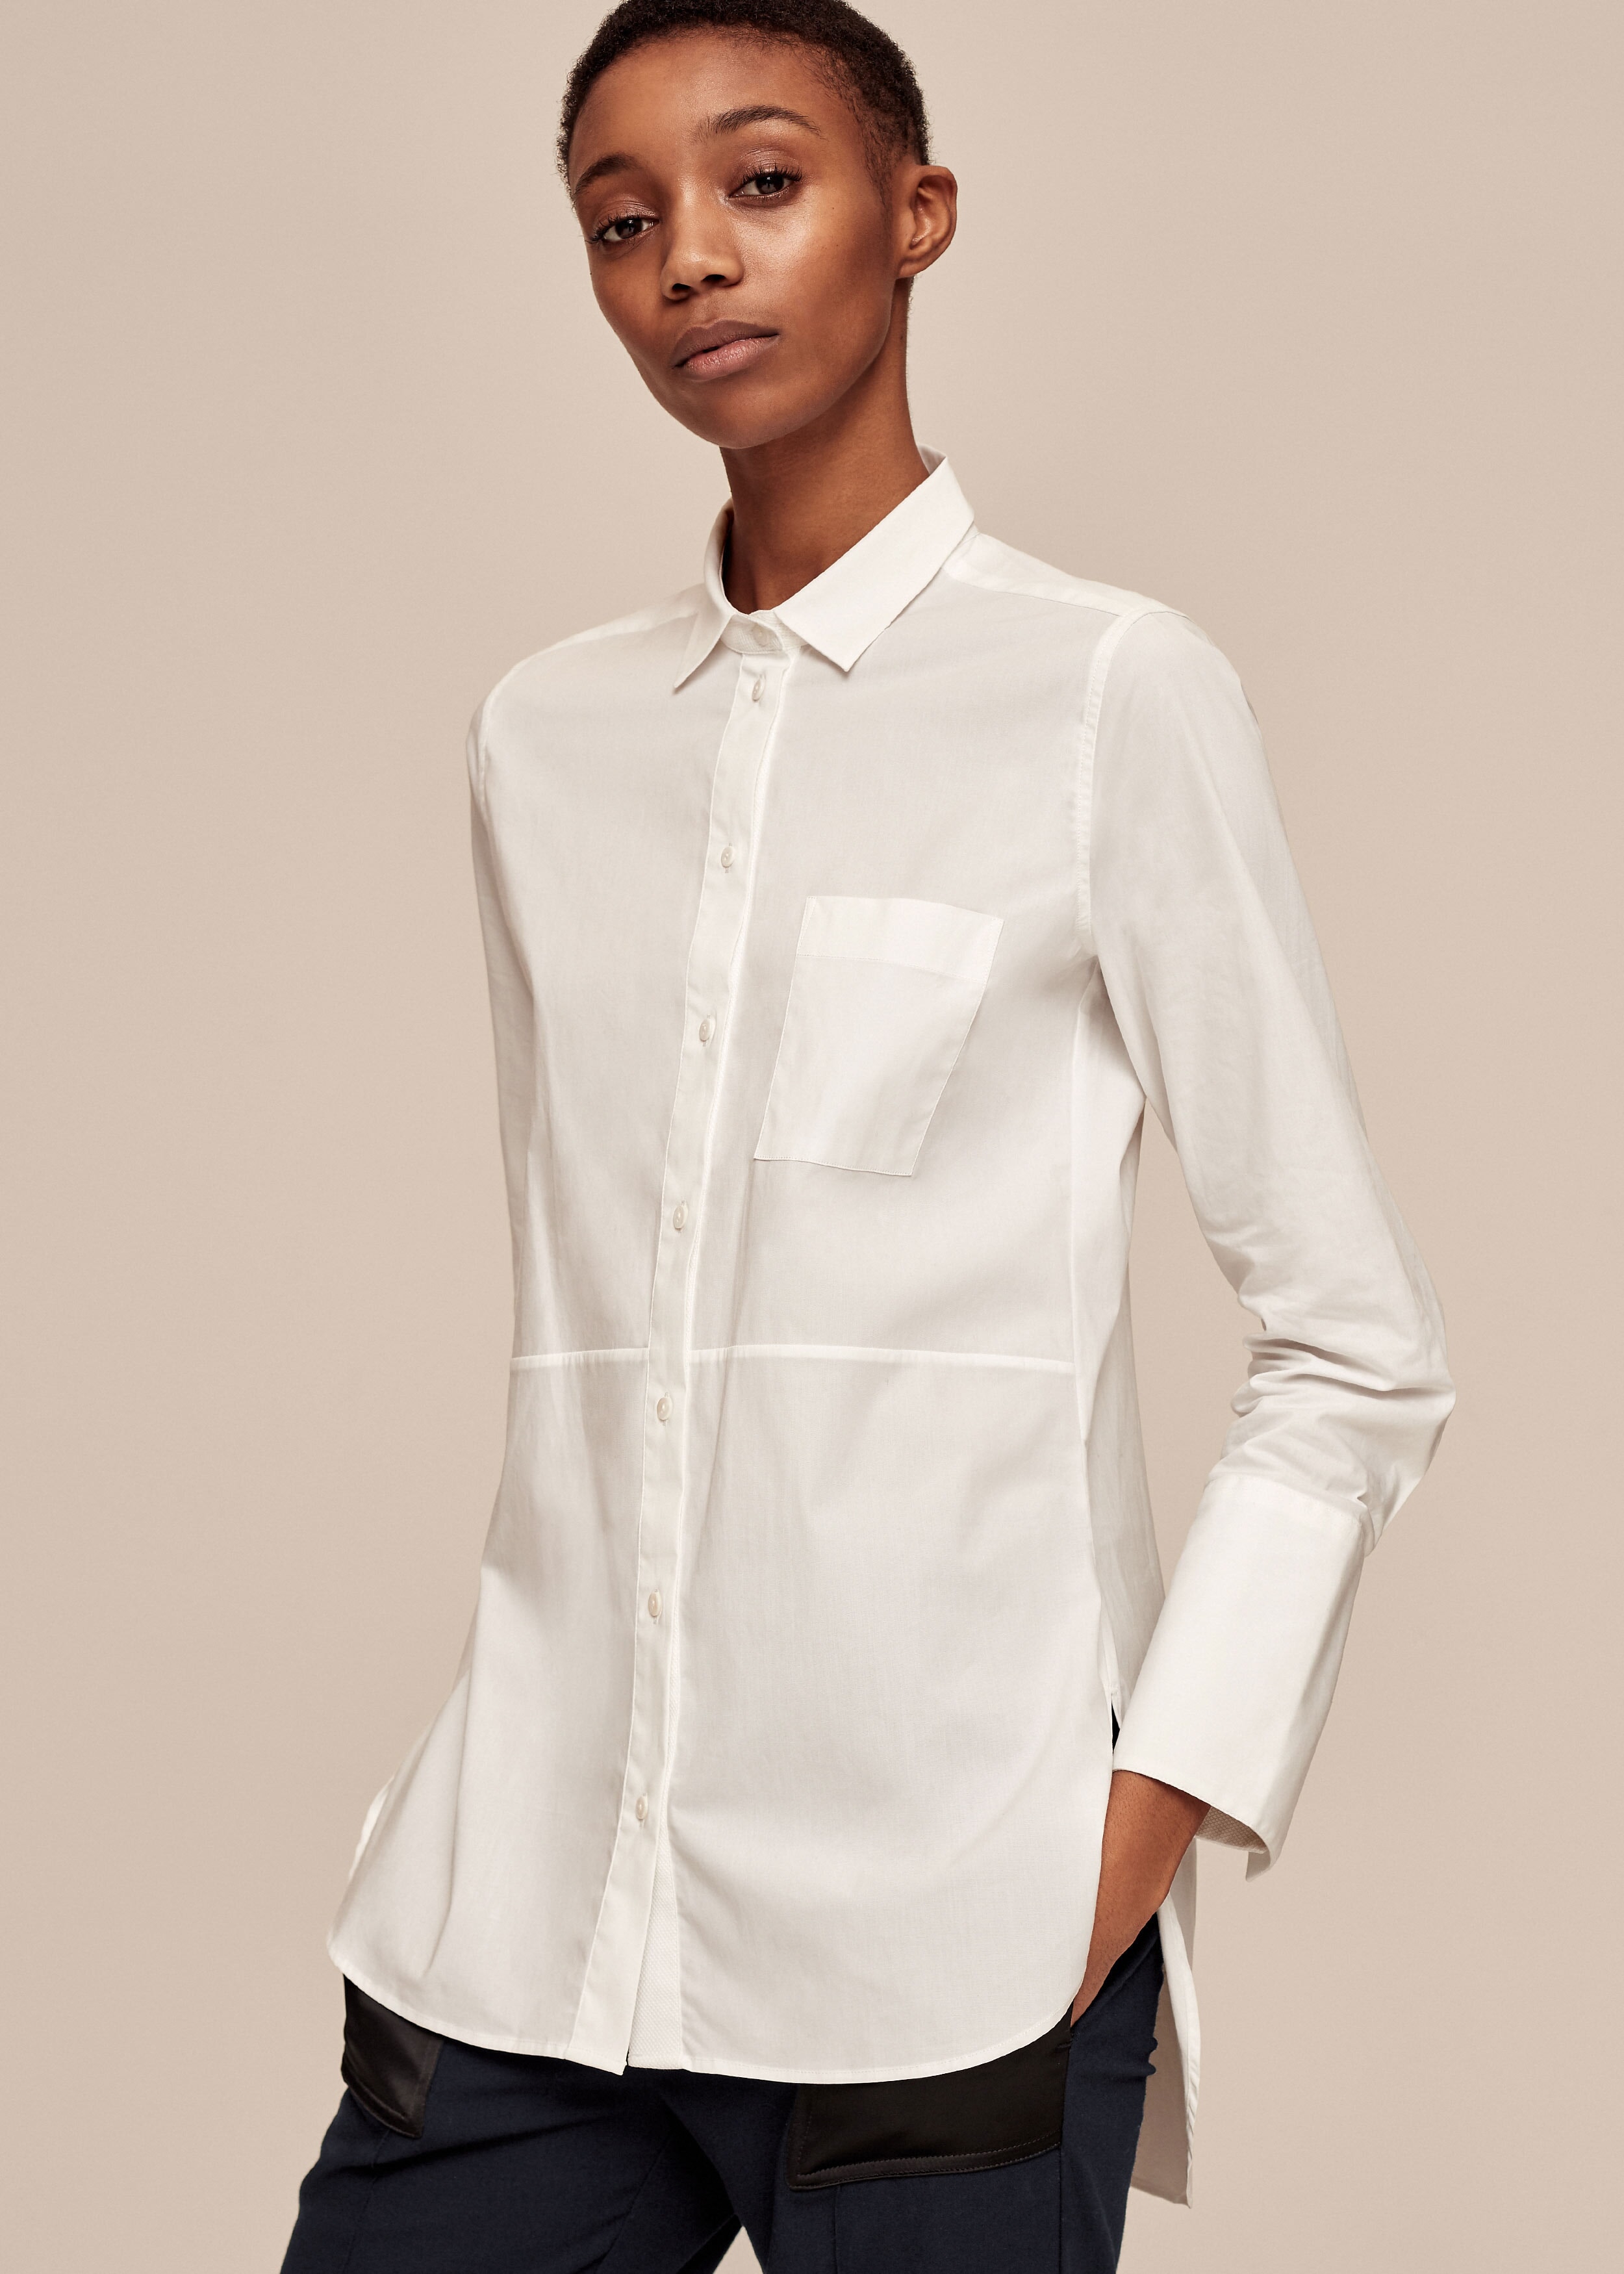 Longline White Cotton Shirt White